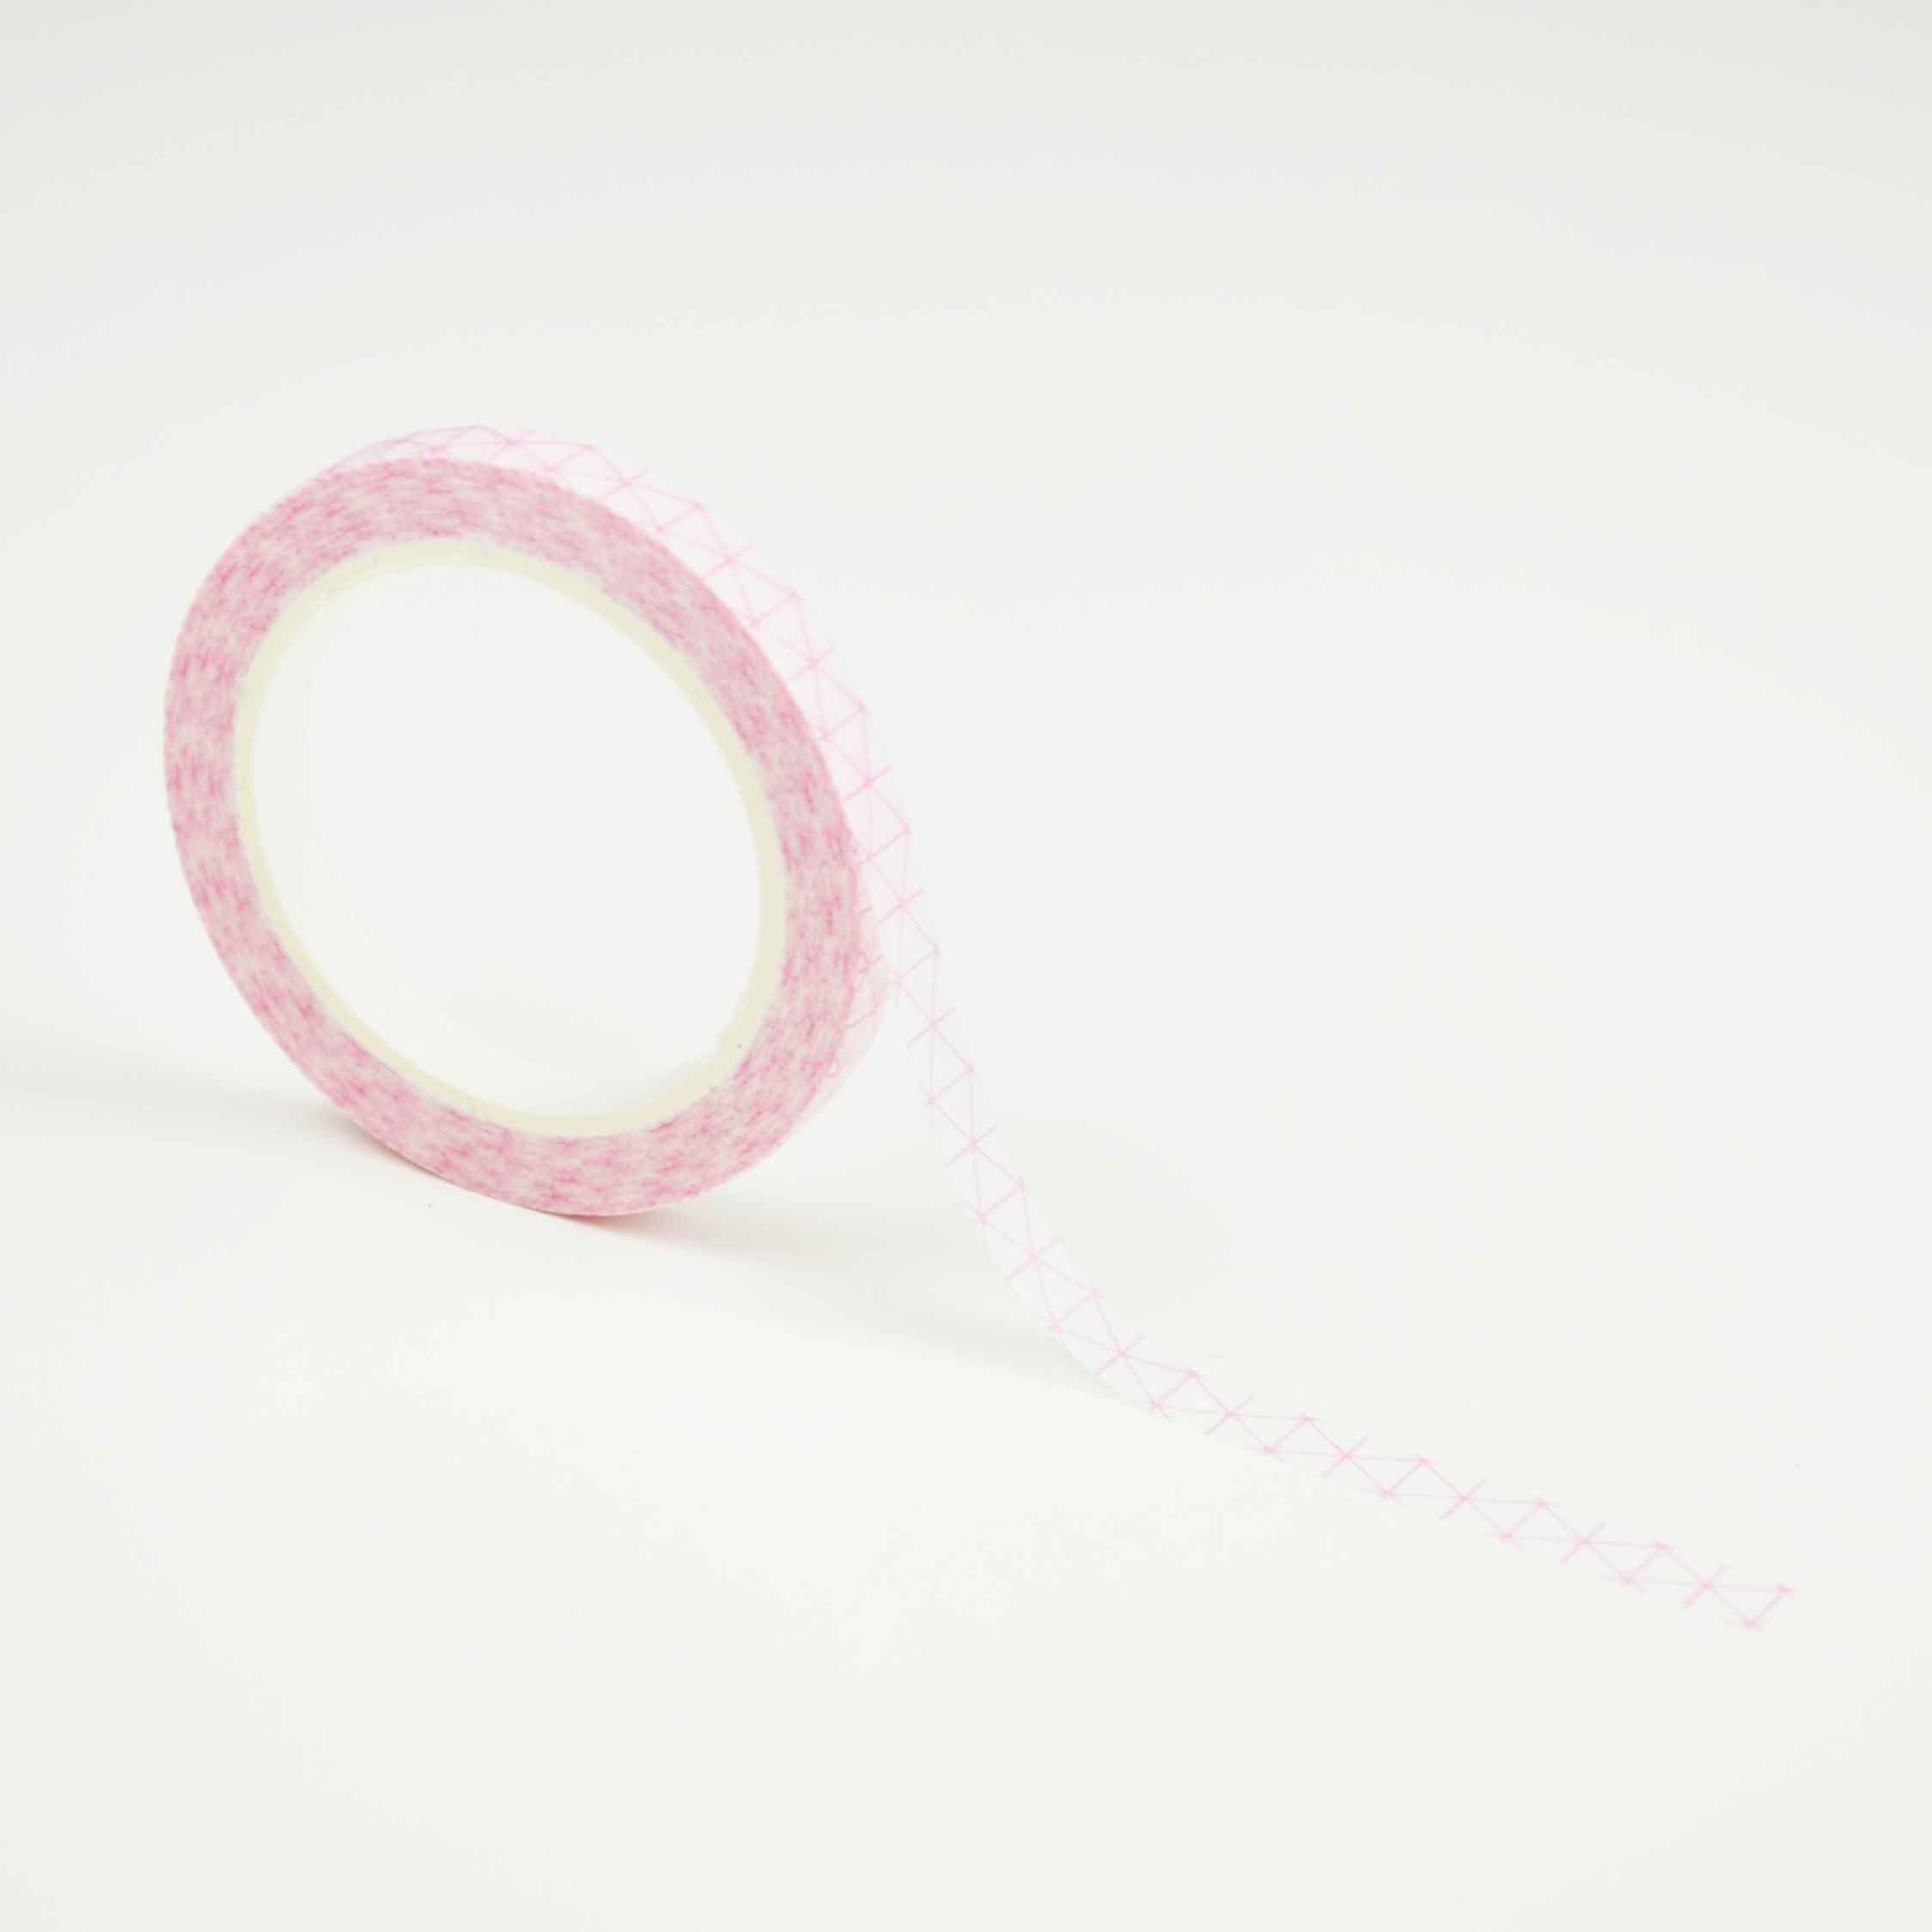 Smalle washi tape: geometric pink